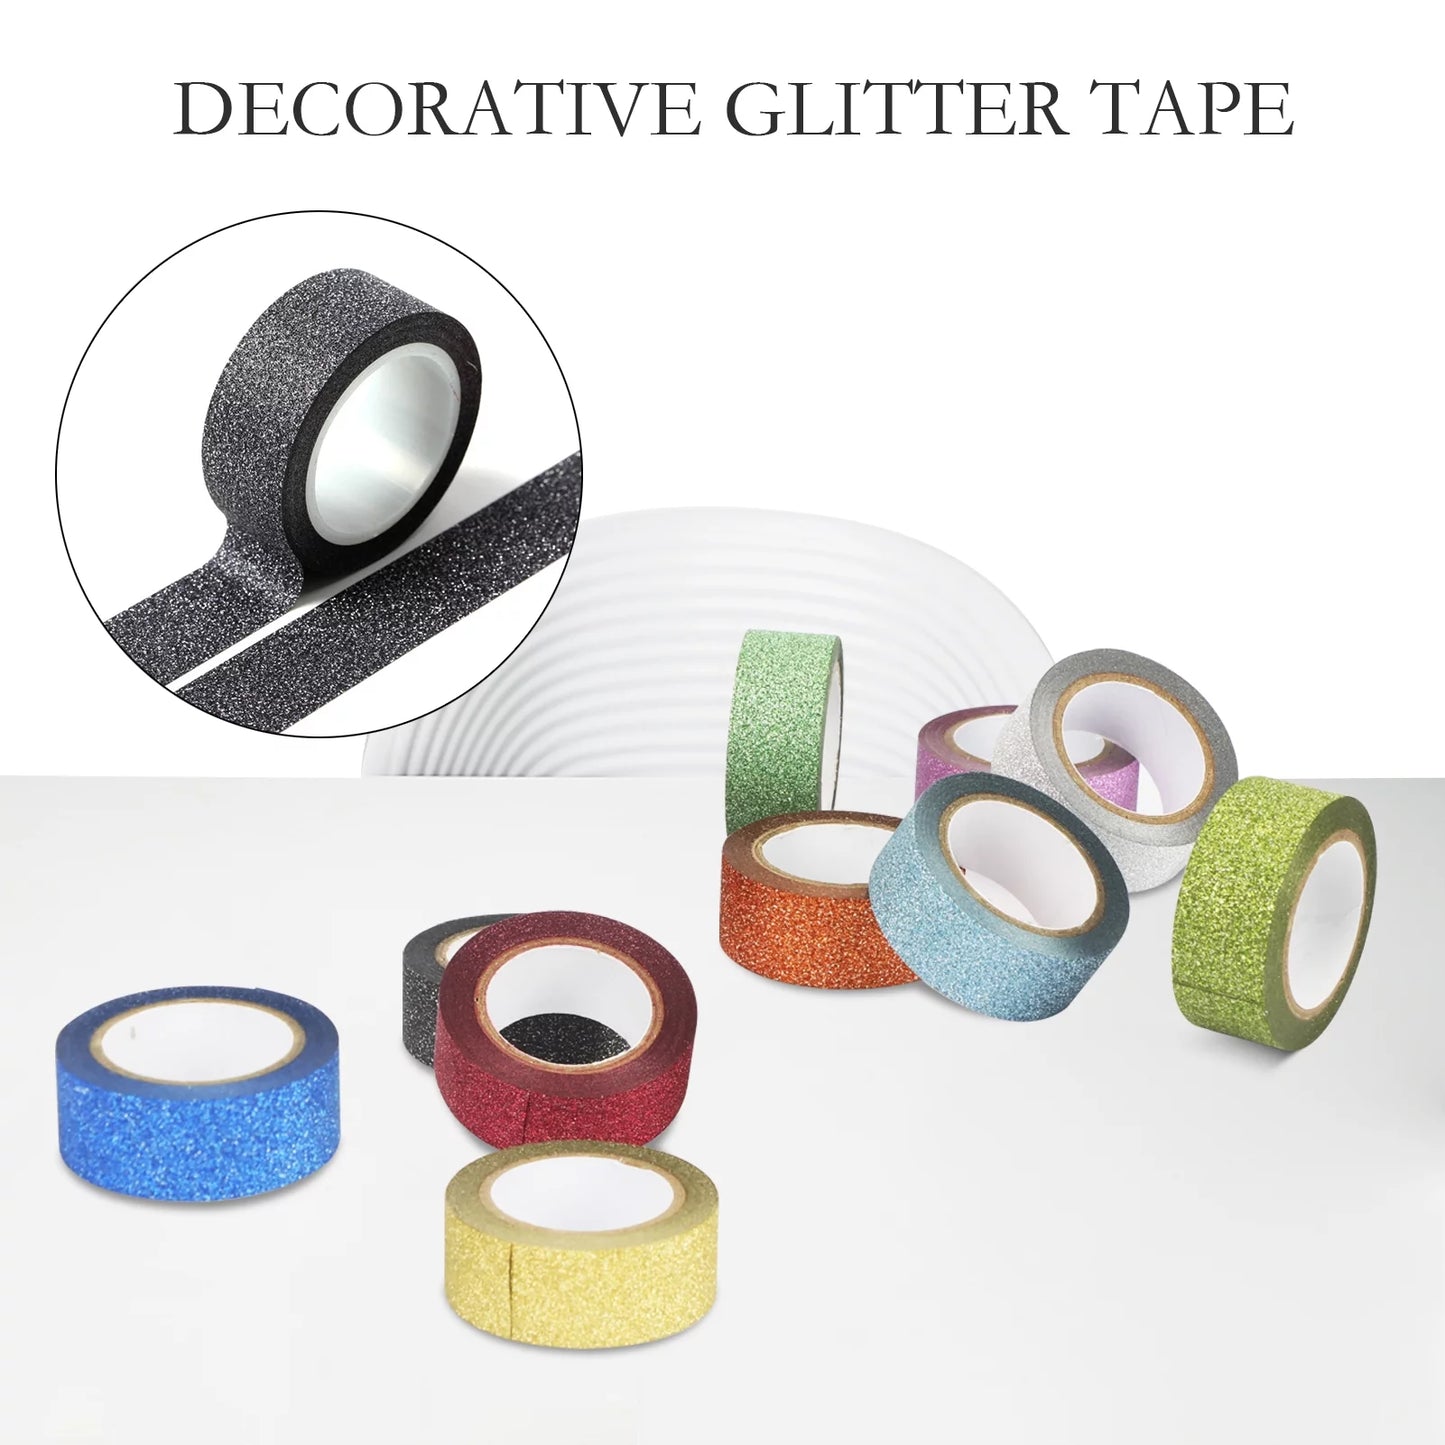 16.4 feet Length 10 Rolls Colored Glitter Decorative Washi Tape - DIY Glitter Washi Tape Masking Tape for Scrapbooking Decoration School Office Supplies